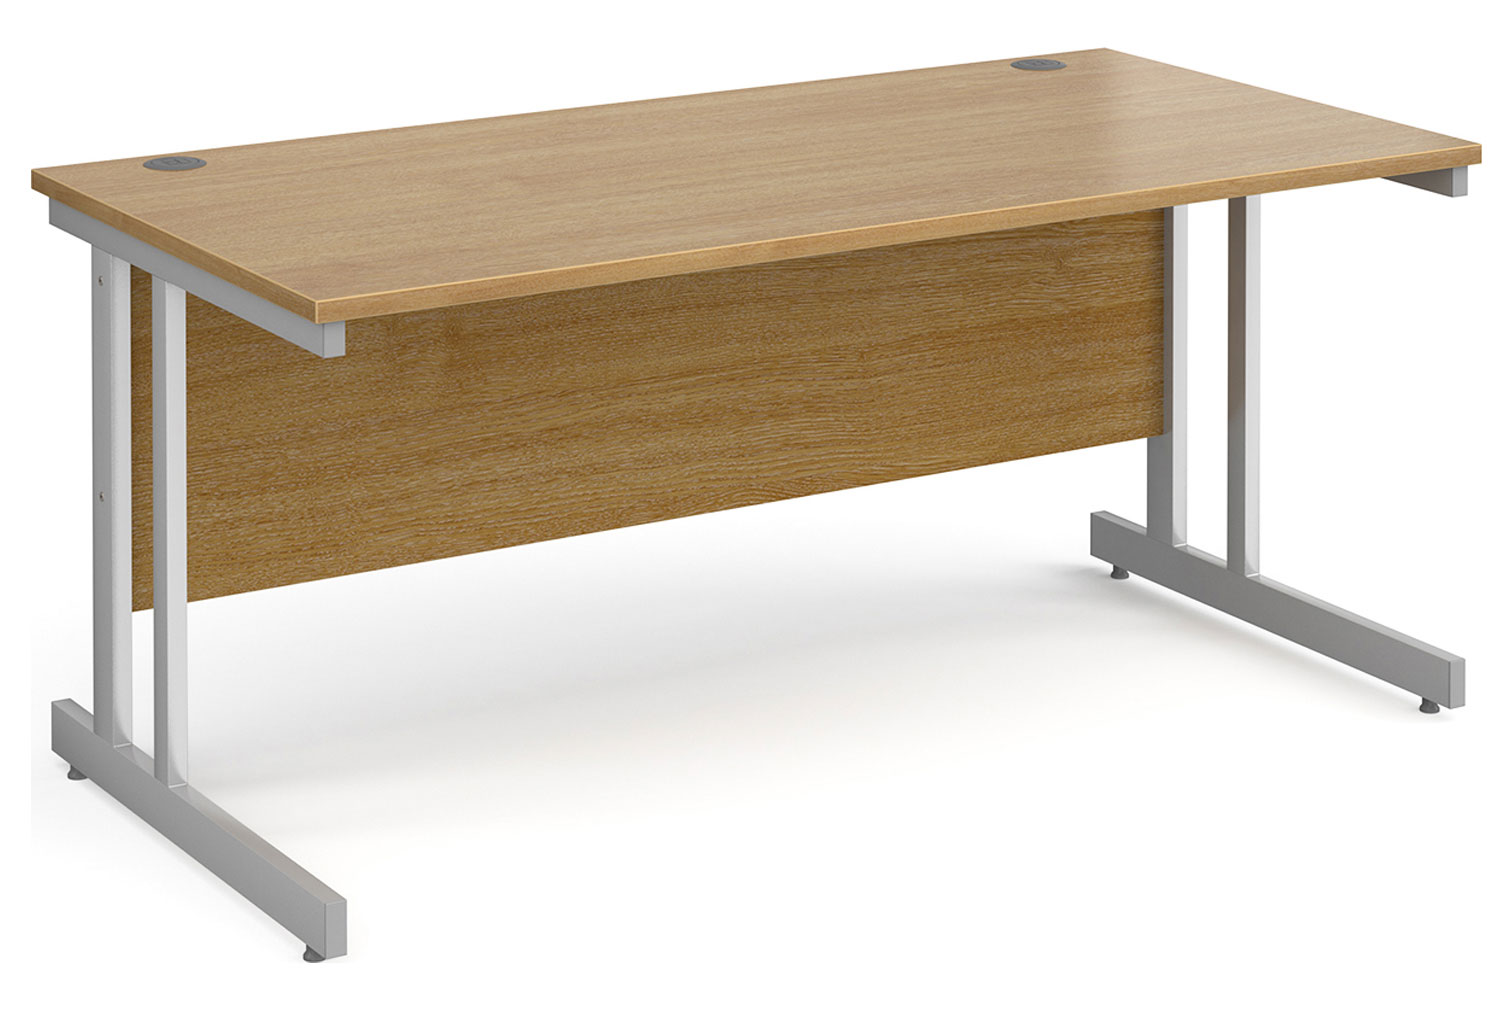 All Oak Double C-Leg Rectangular Office Desk, 160wx80dx73h (cm), Express Delivery